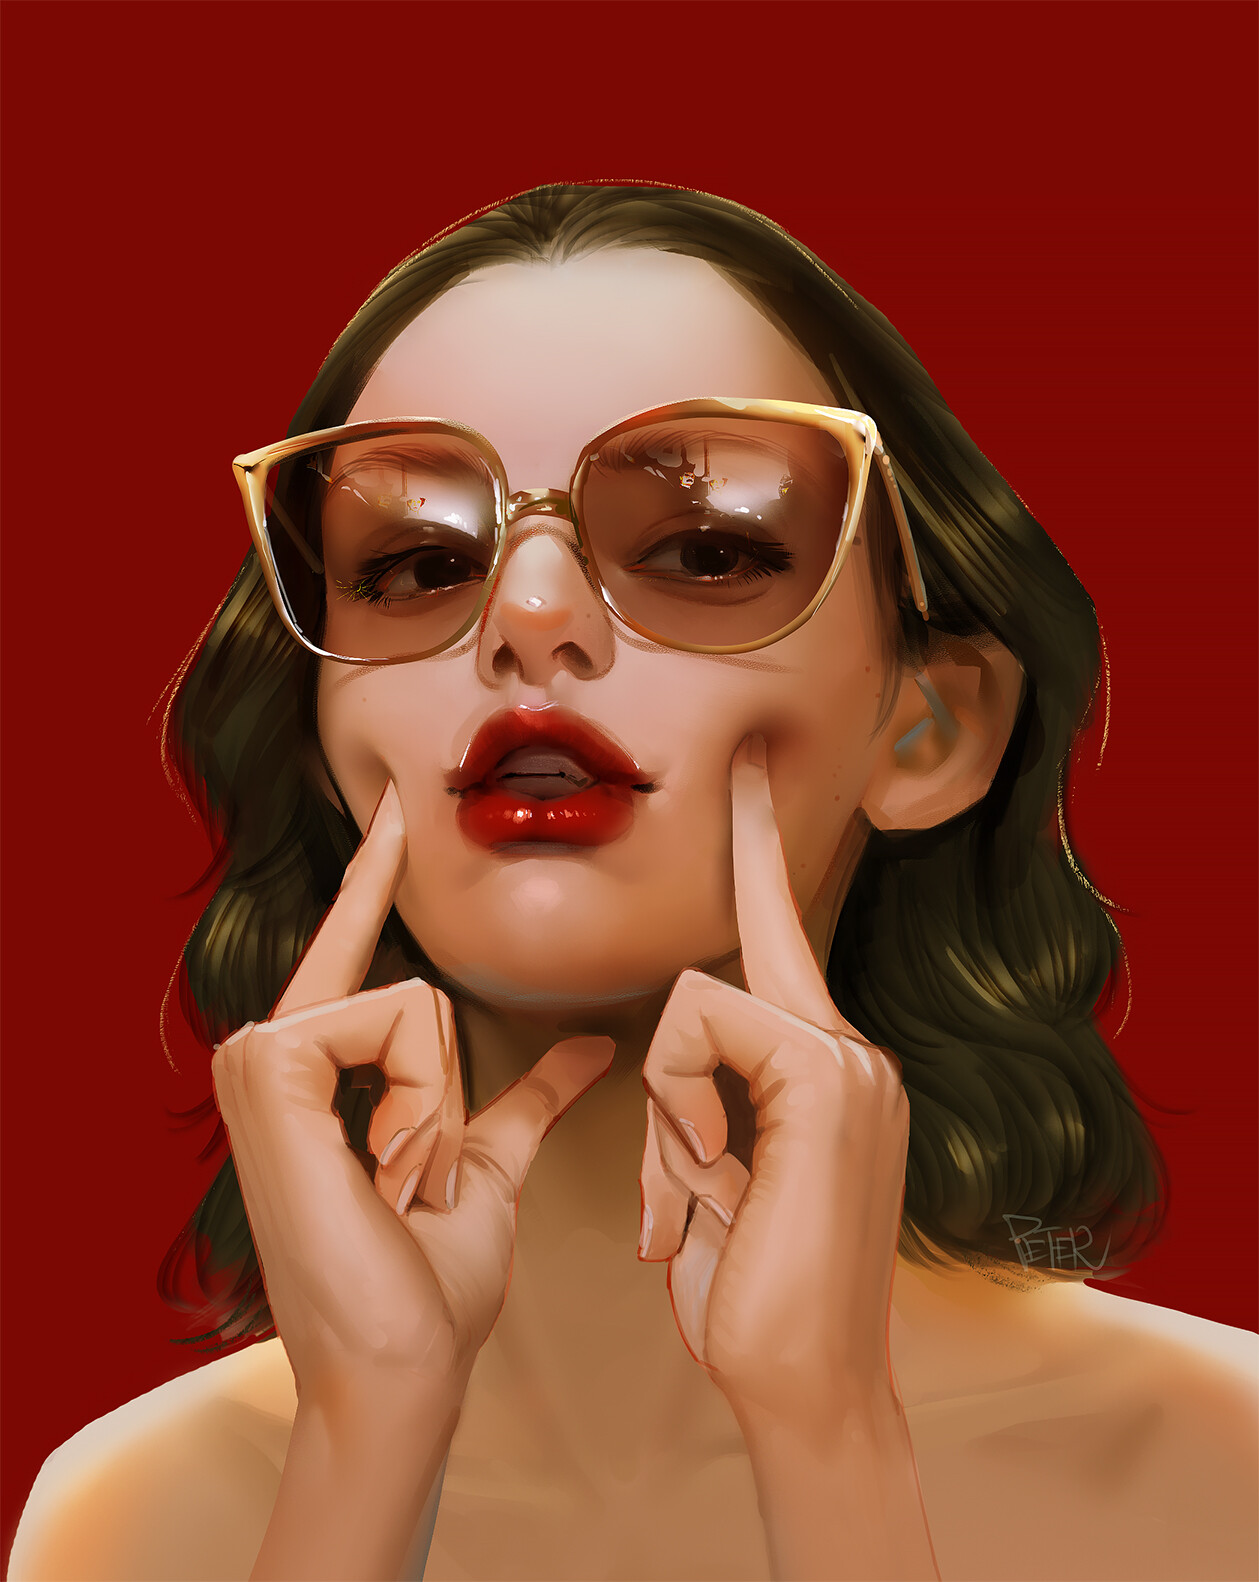 Peter Xiao Digital Digital Art Artwork Drawing Women Women With Glasses Glasses Short Hair Looking A 1259x1582